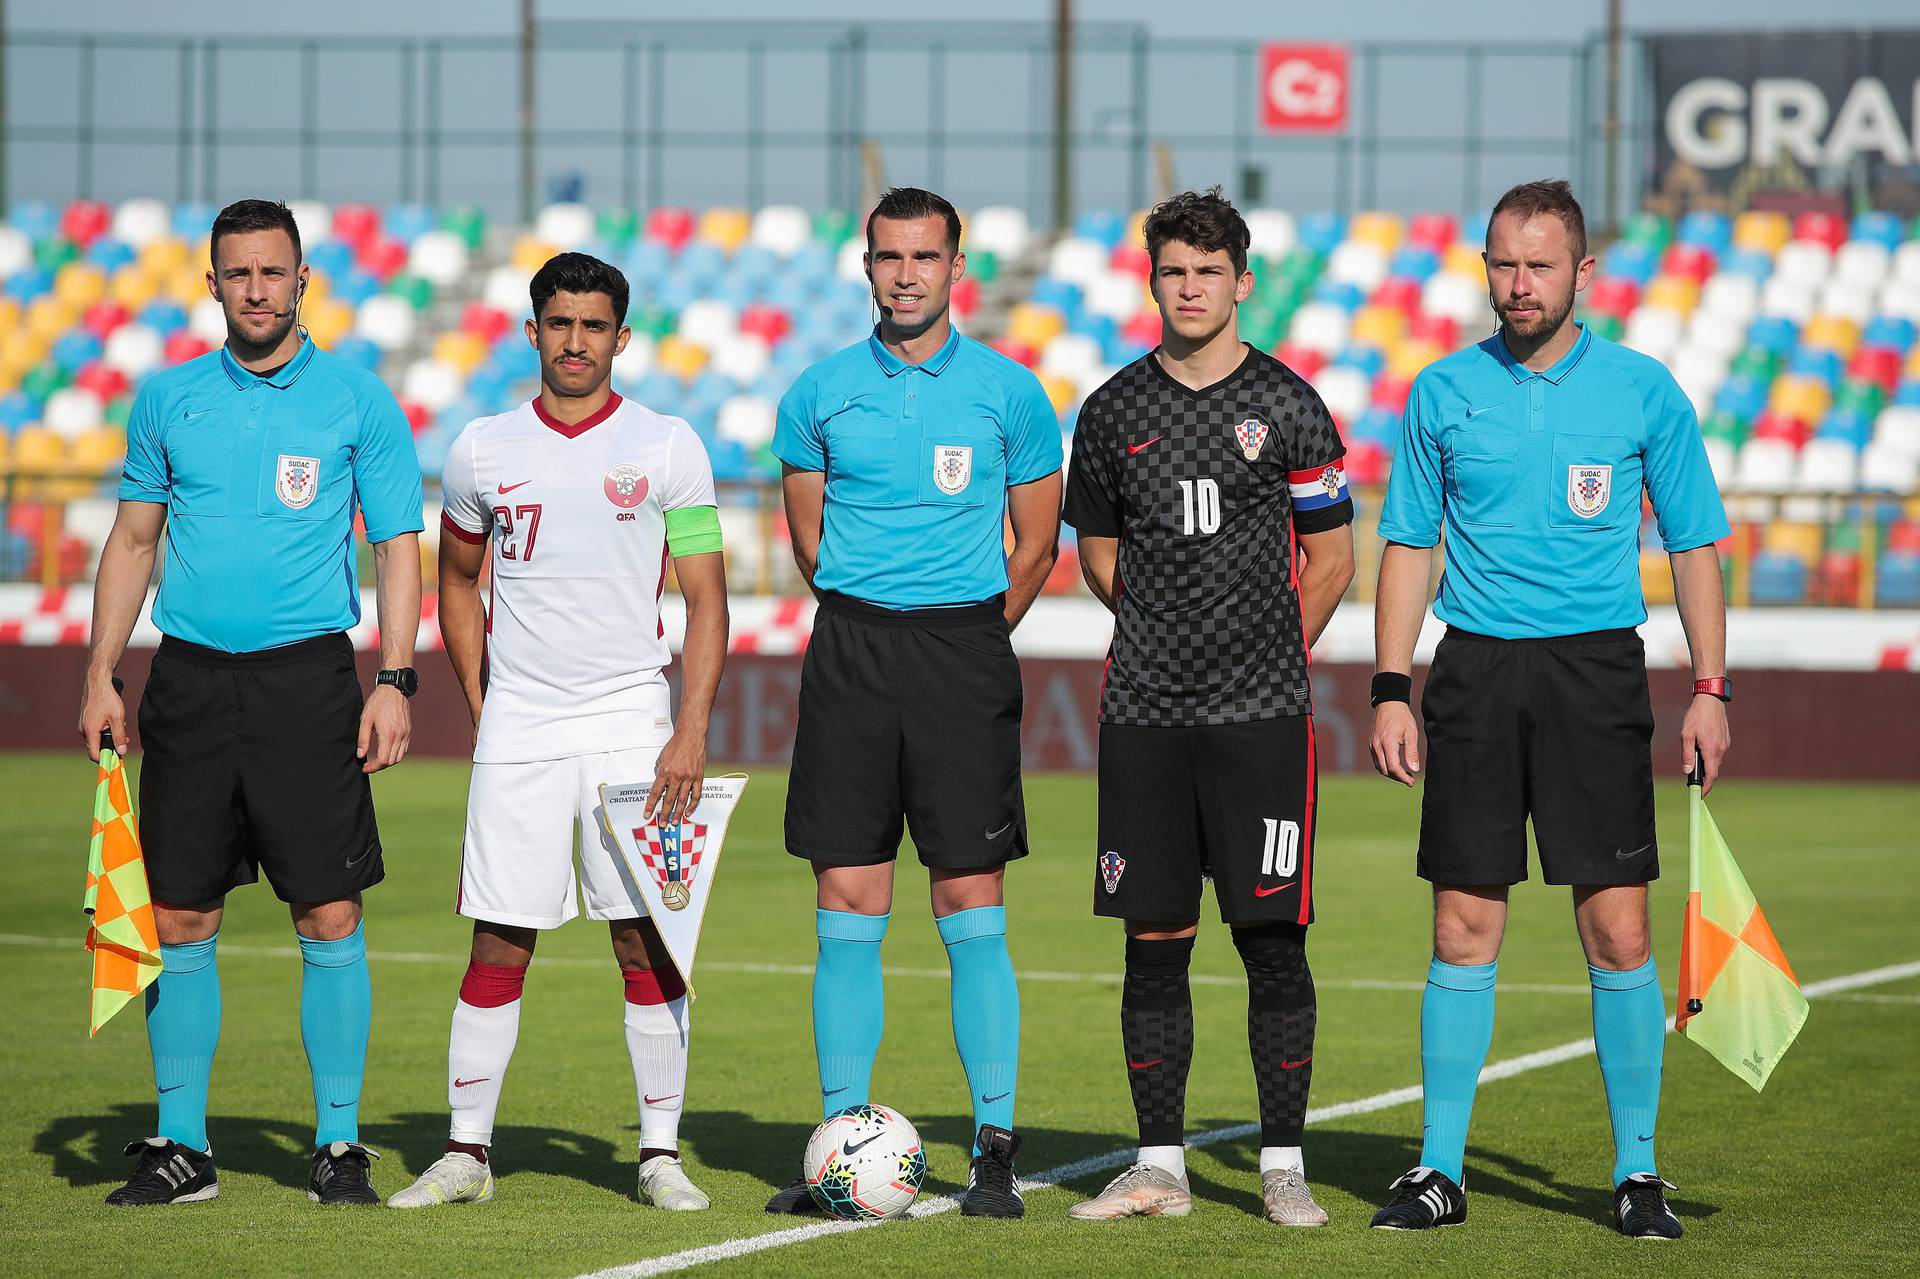 Velika Gorica: Prijateljska nogometna utakmica U-20, Hrvatska - Katar